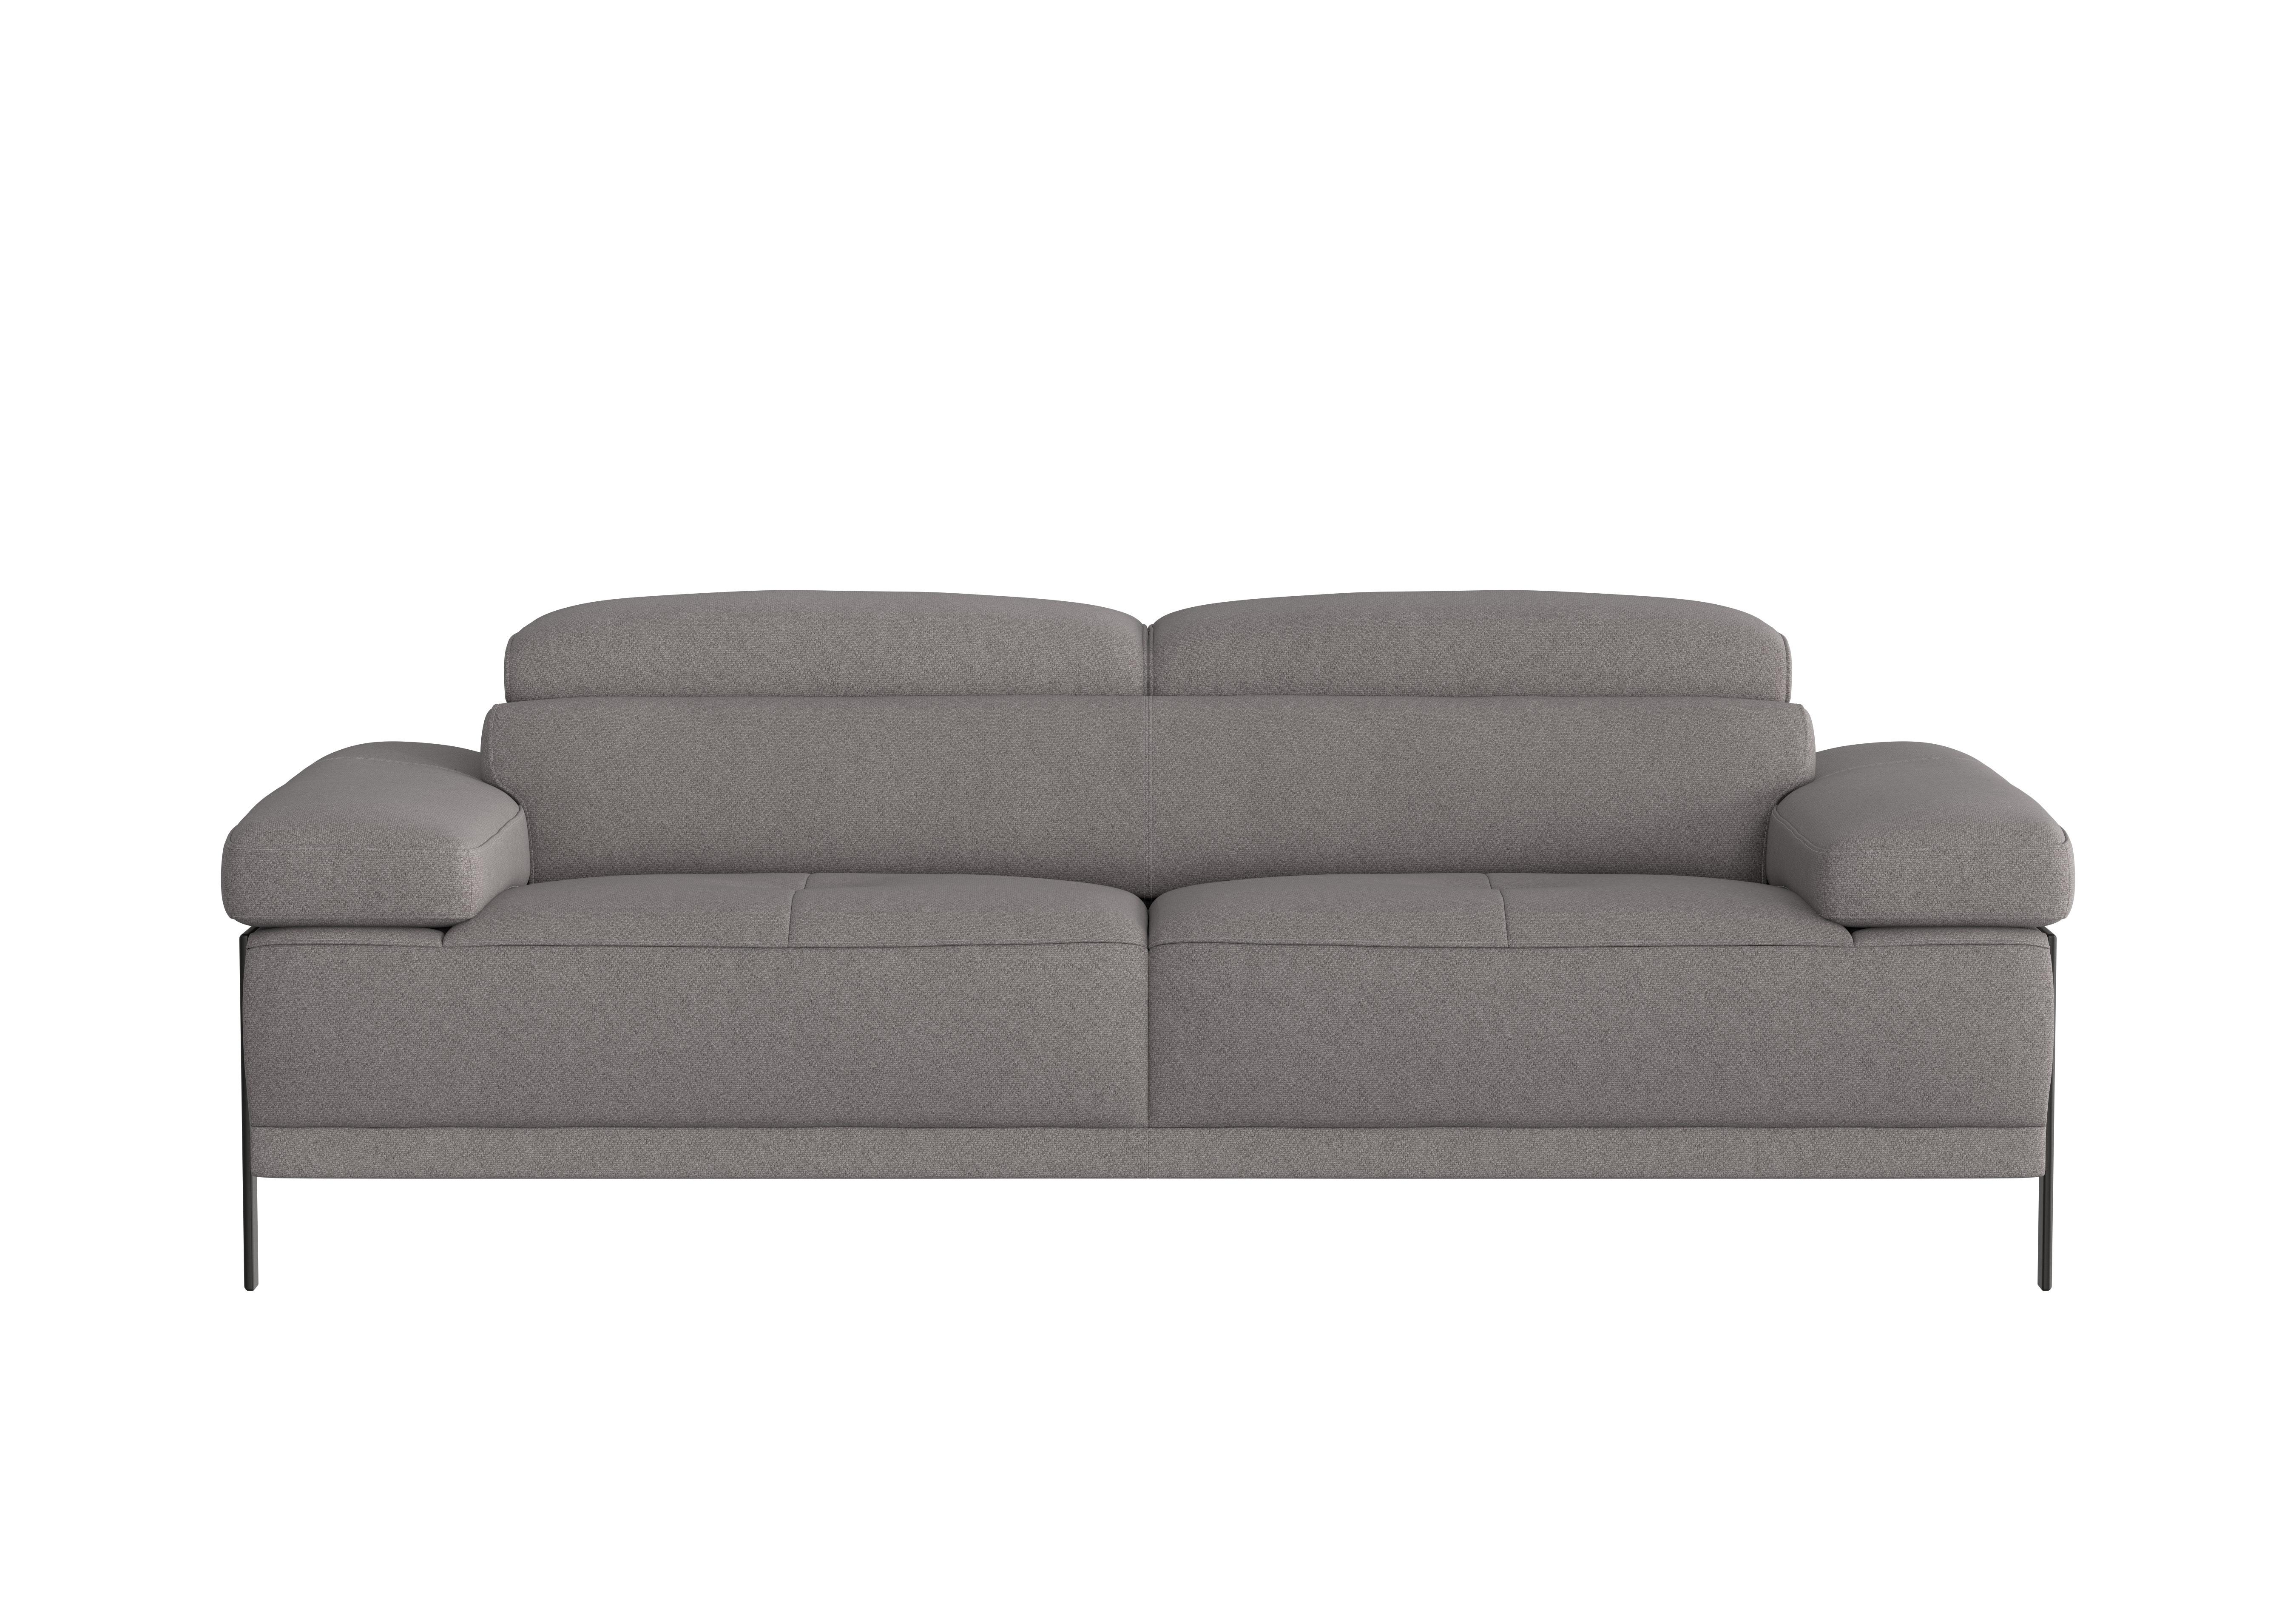 Theron 3 Seater Fabric Sofa in Coupe Grigio Topo 609 Ti Ft on Furniture Village